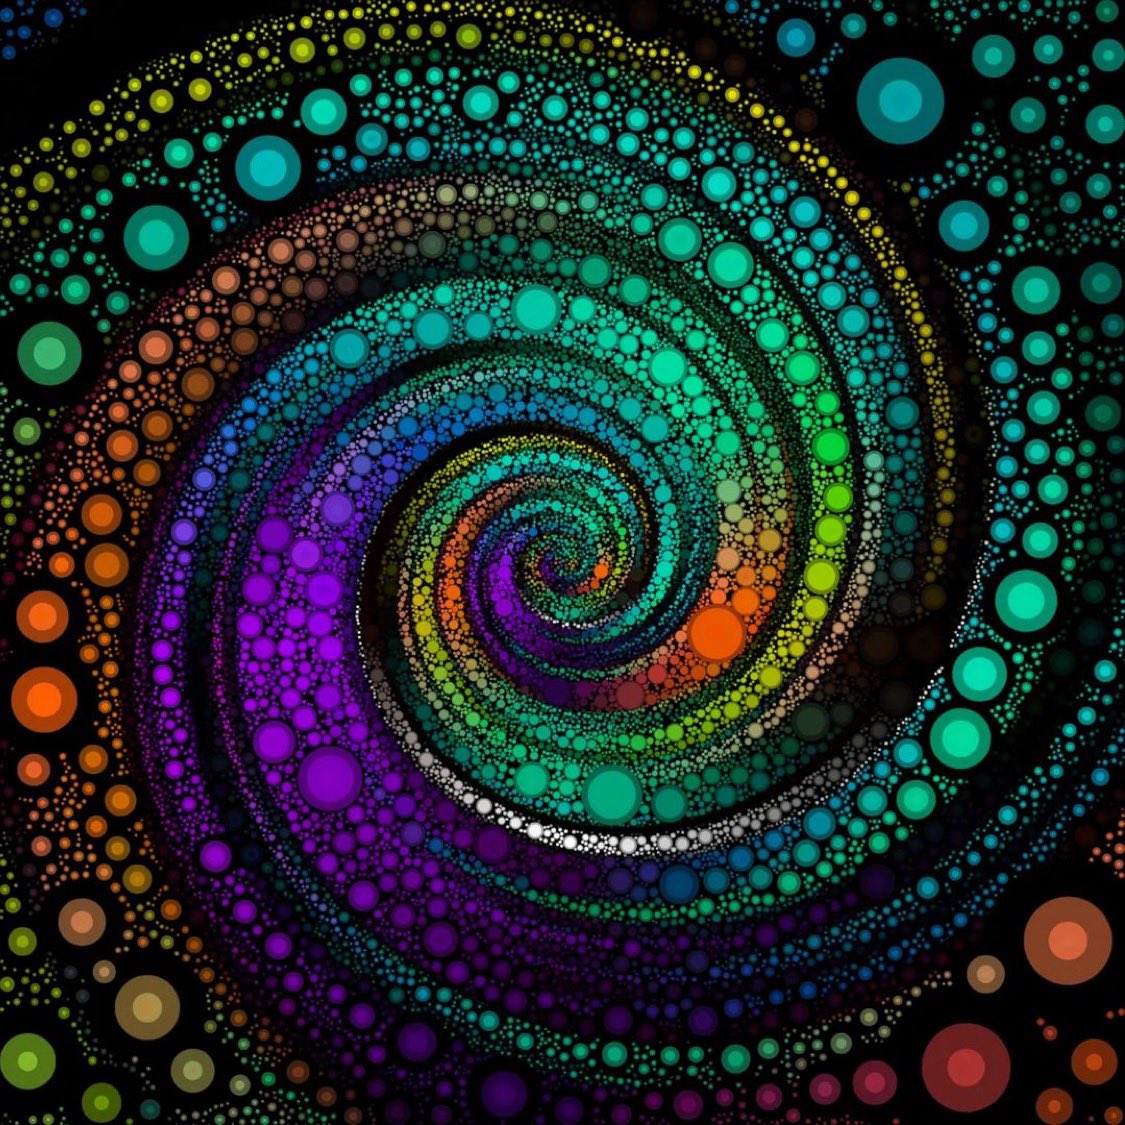 Fractal Art by, m_o_s_arts
・・・
#visionaryart #spiritualart #trippy #trippyart #psychedelic #psychedelicart #sacredgeometryart #sacredgeometry #fibonacci #spirals #spiral #fractal #fractals #higherself #quantumphysics #cymatics #blackhole #kaleidoscopeart #thirdeye